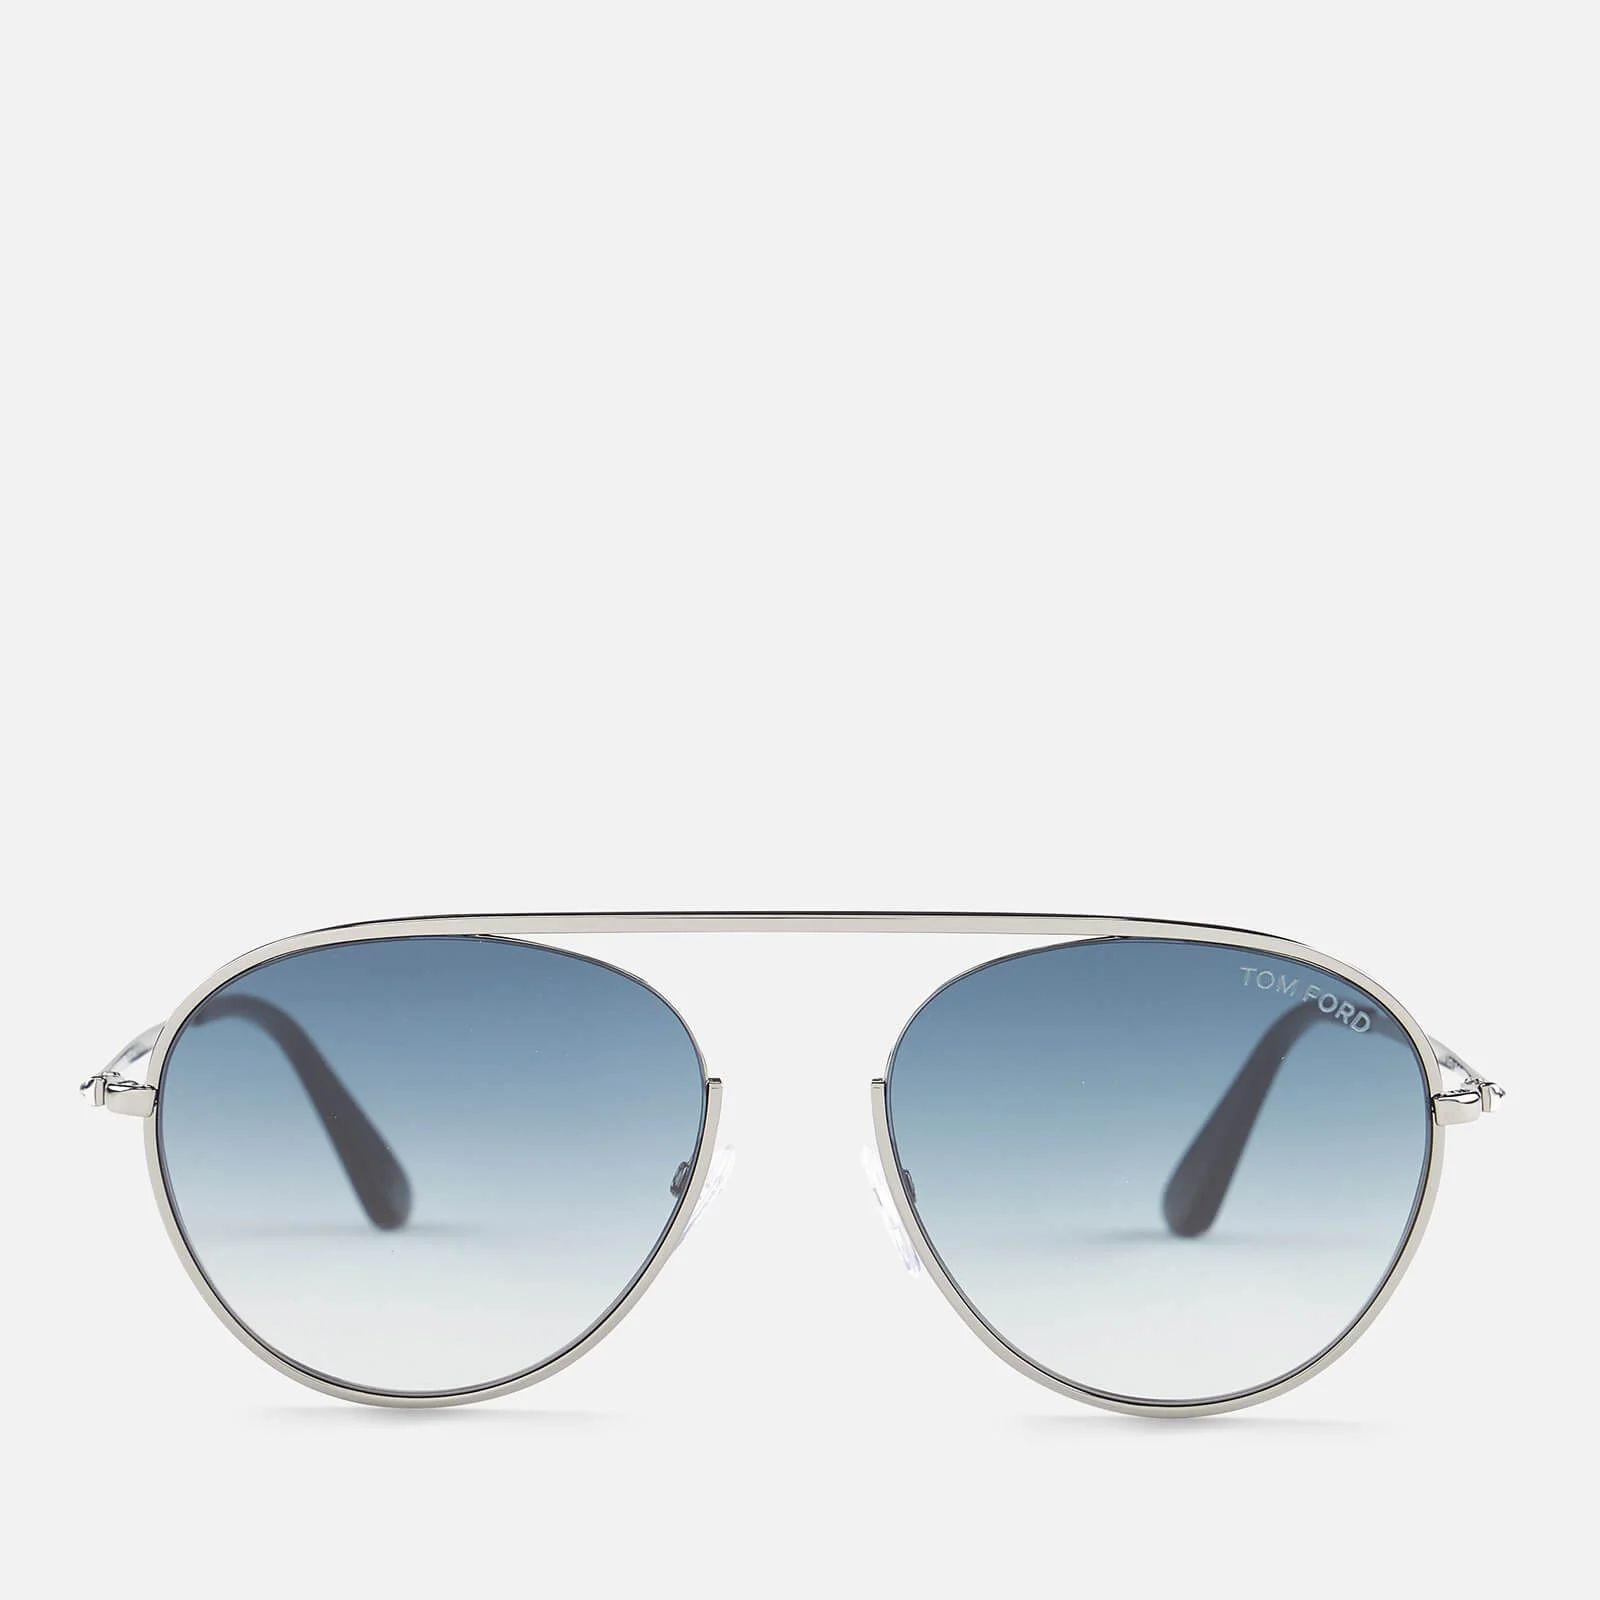 Tom Ford Men's Keith Aviator Style Sunglasses - Shiny Gunmetal/Gradient Blue Image 1